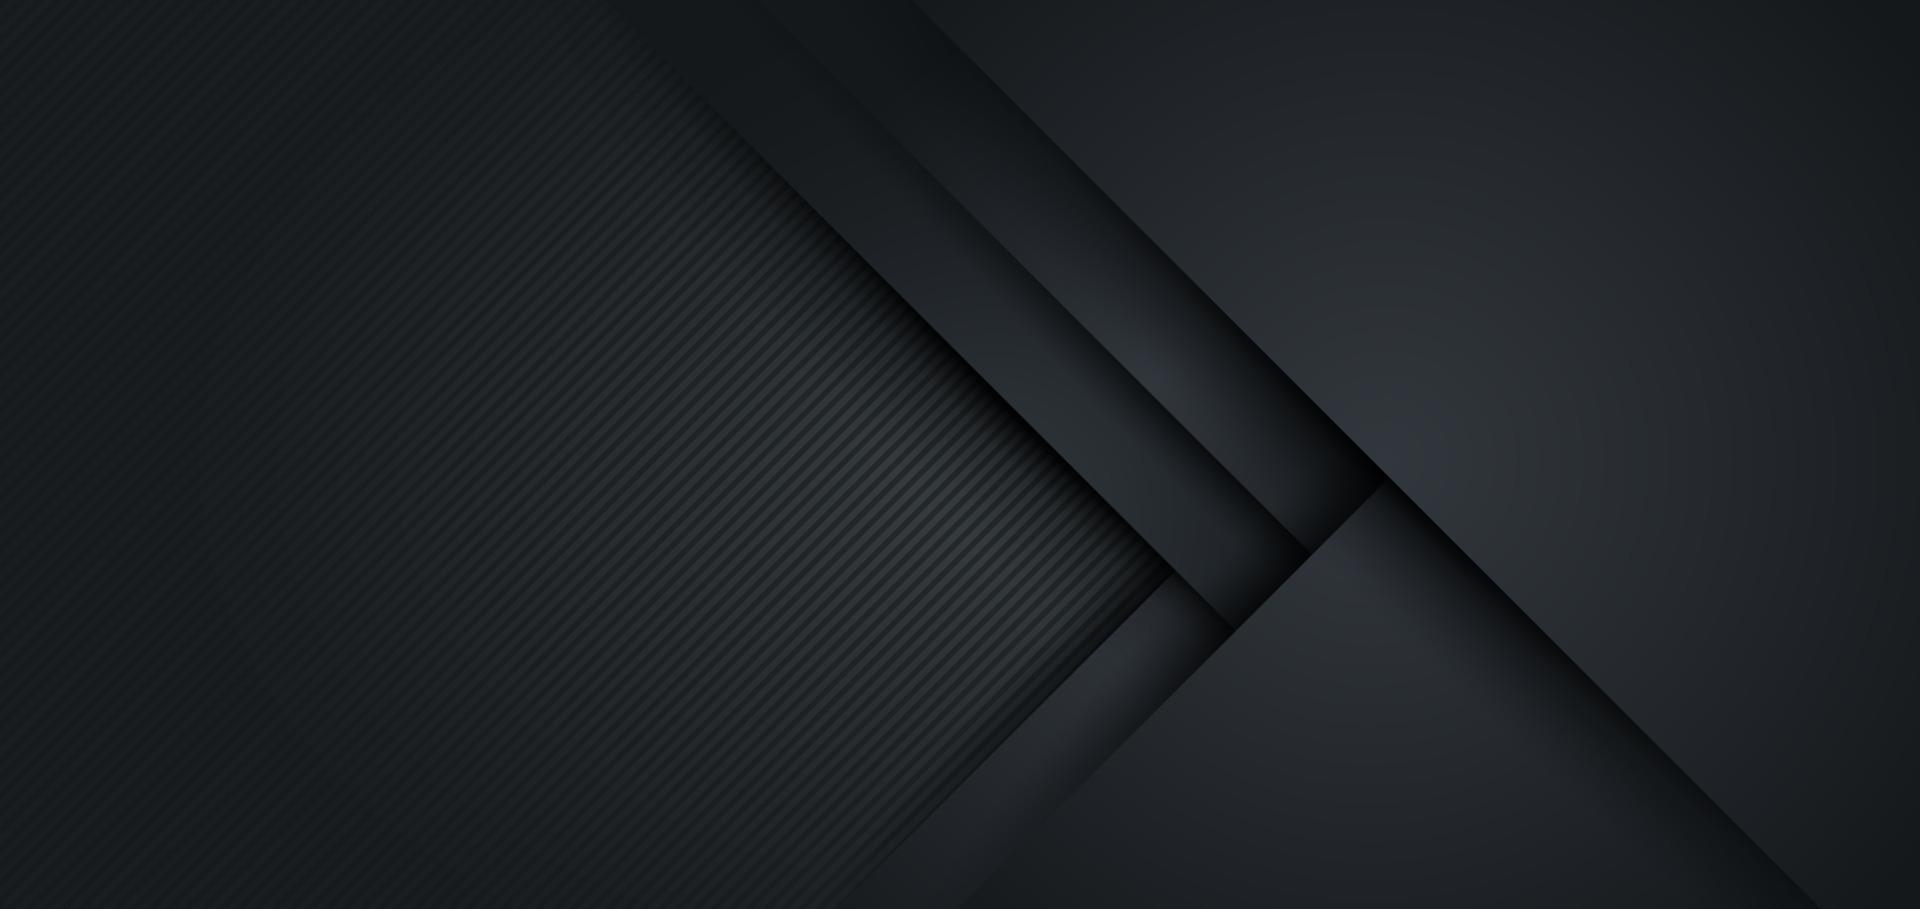 Fondo de forma geométrica negra abstracta con textura de línea diagonal.  diseño para presentación, banner, portada, web, flyer, tarjeta, cartel,  juego, textura, diapositiva y powerpoint. ilustración vectorial 2623583  Vector en Vecteezy